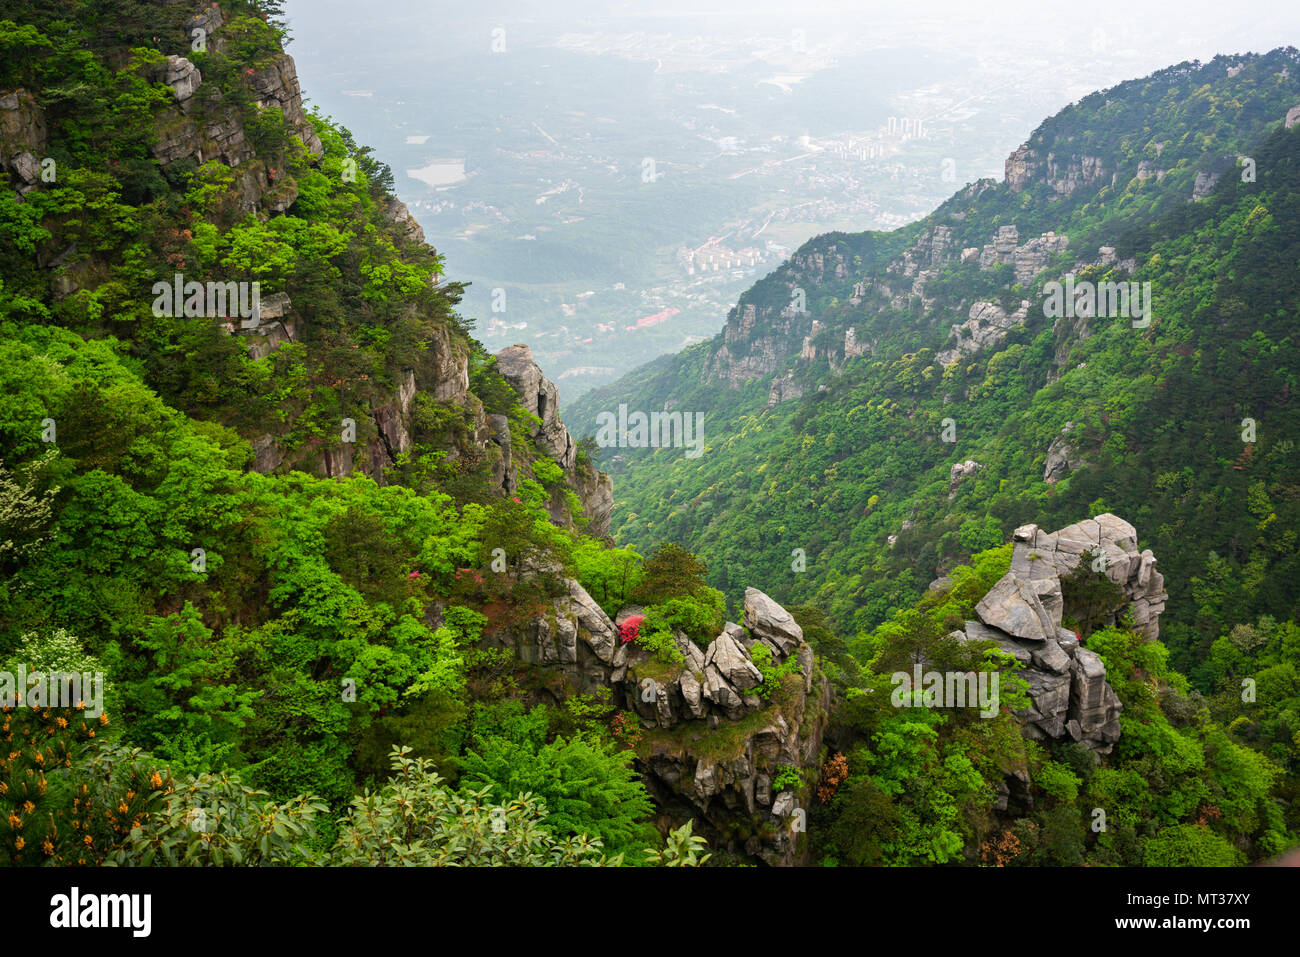 Vista panoramica del parco nazionale di Lushan montagna in Jiangxi Cina con la città di Jiujiang in background Foto Stock